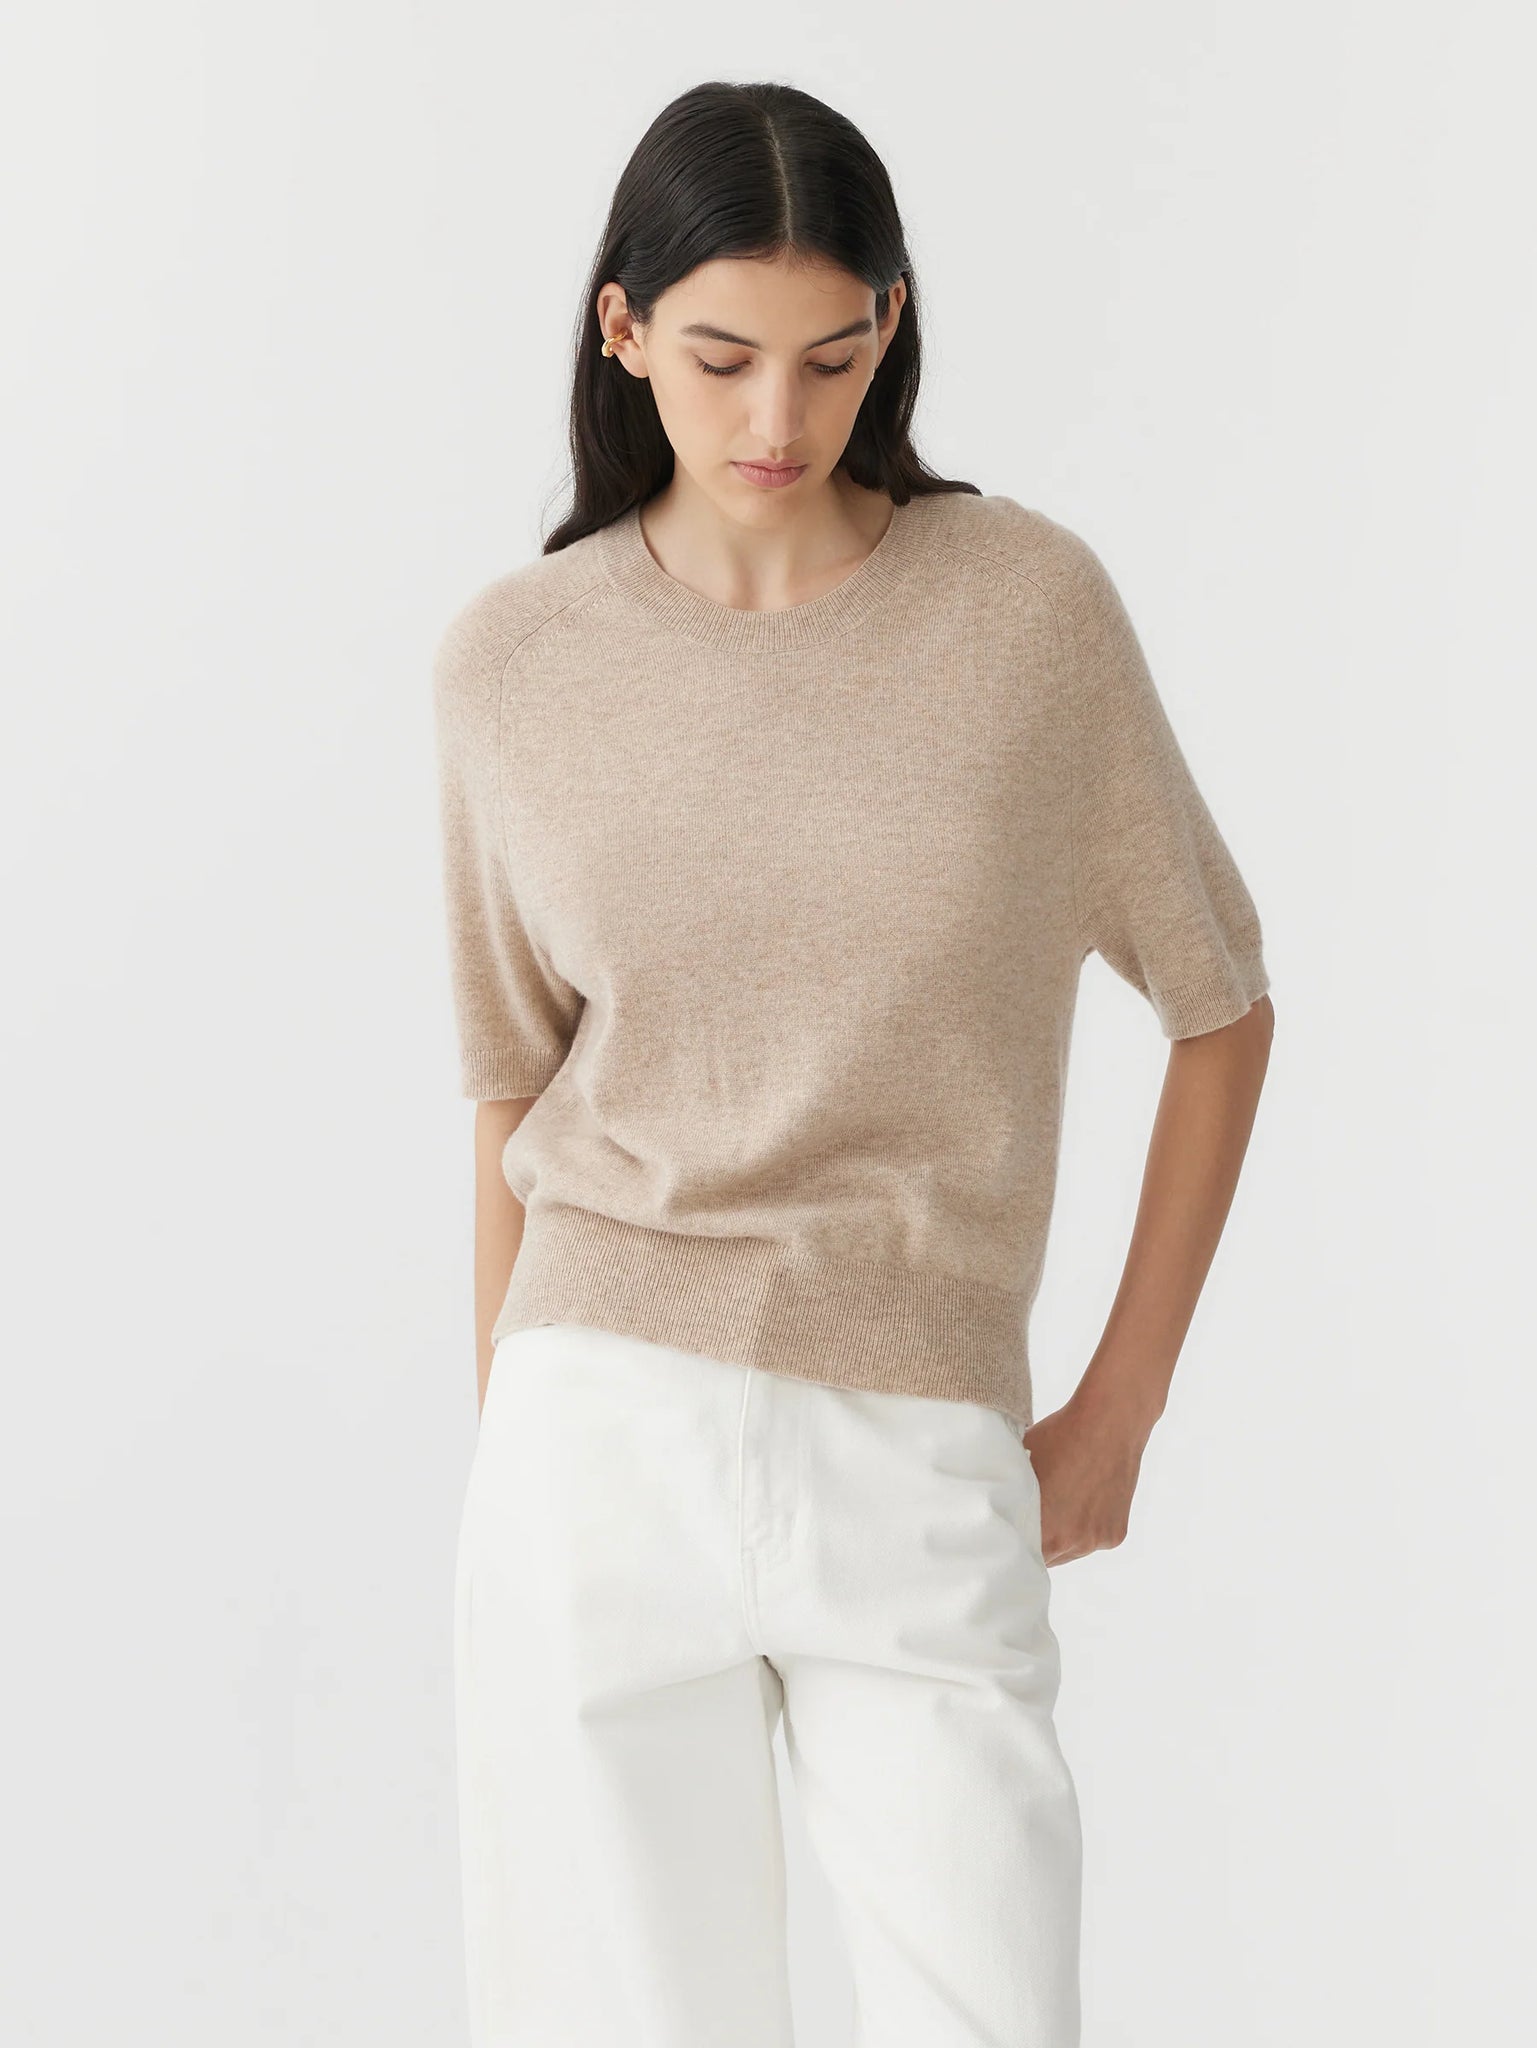 wool cashmere t.shirt knit